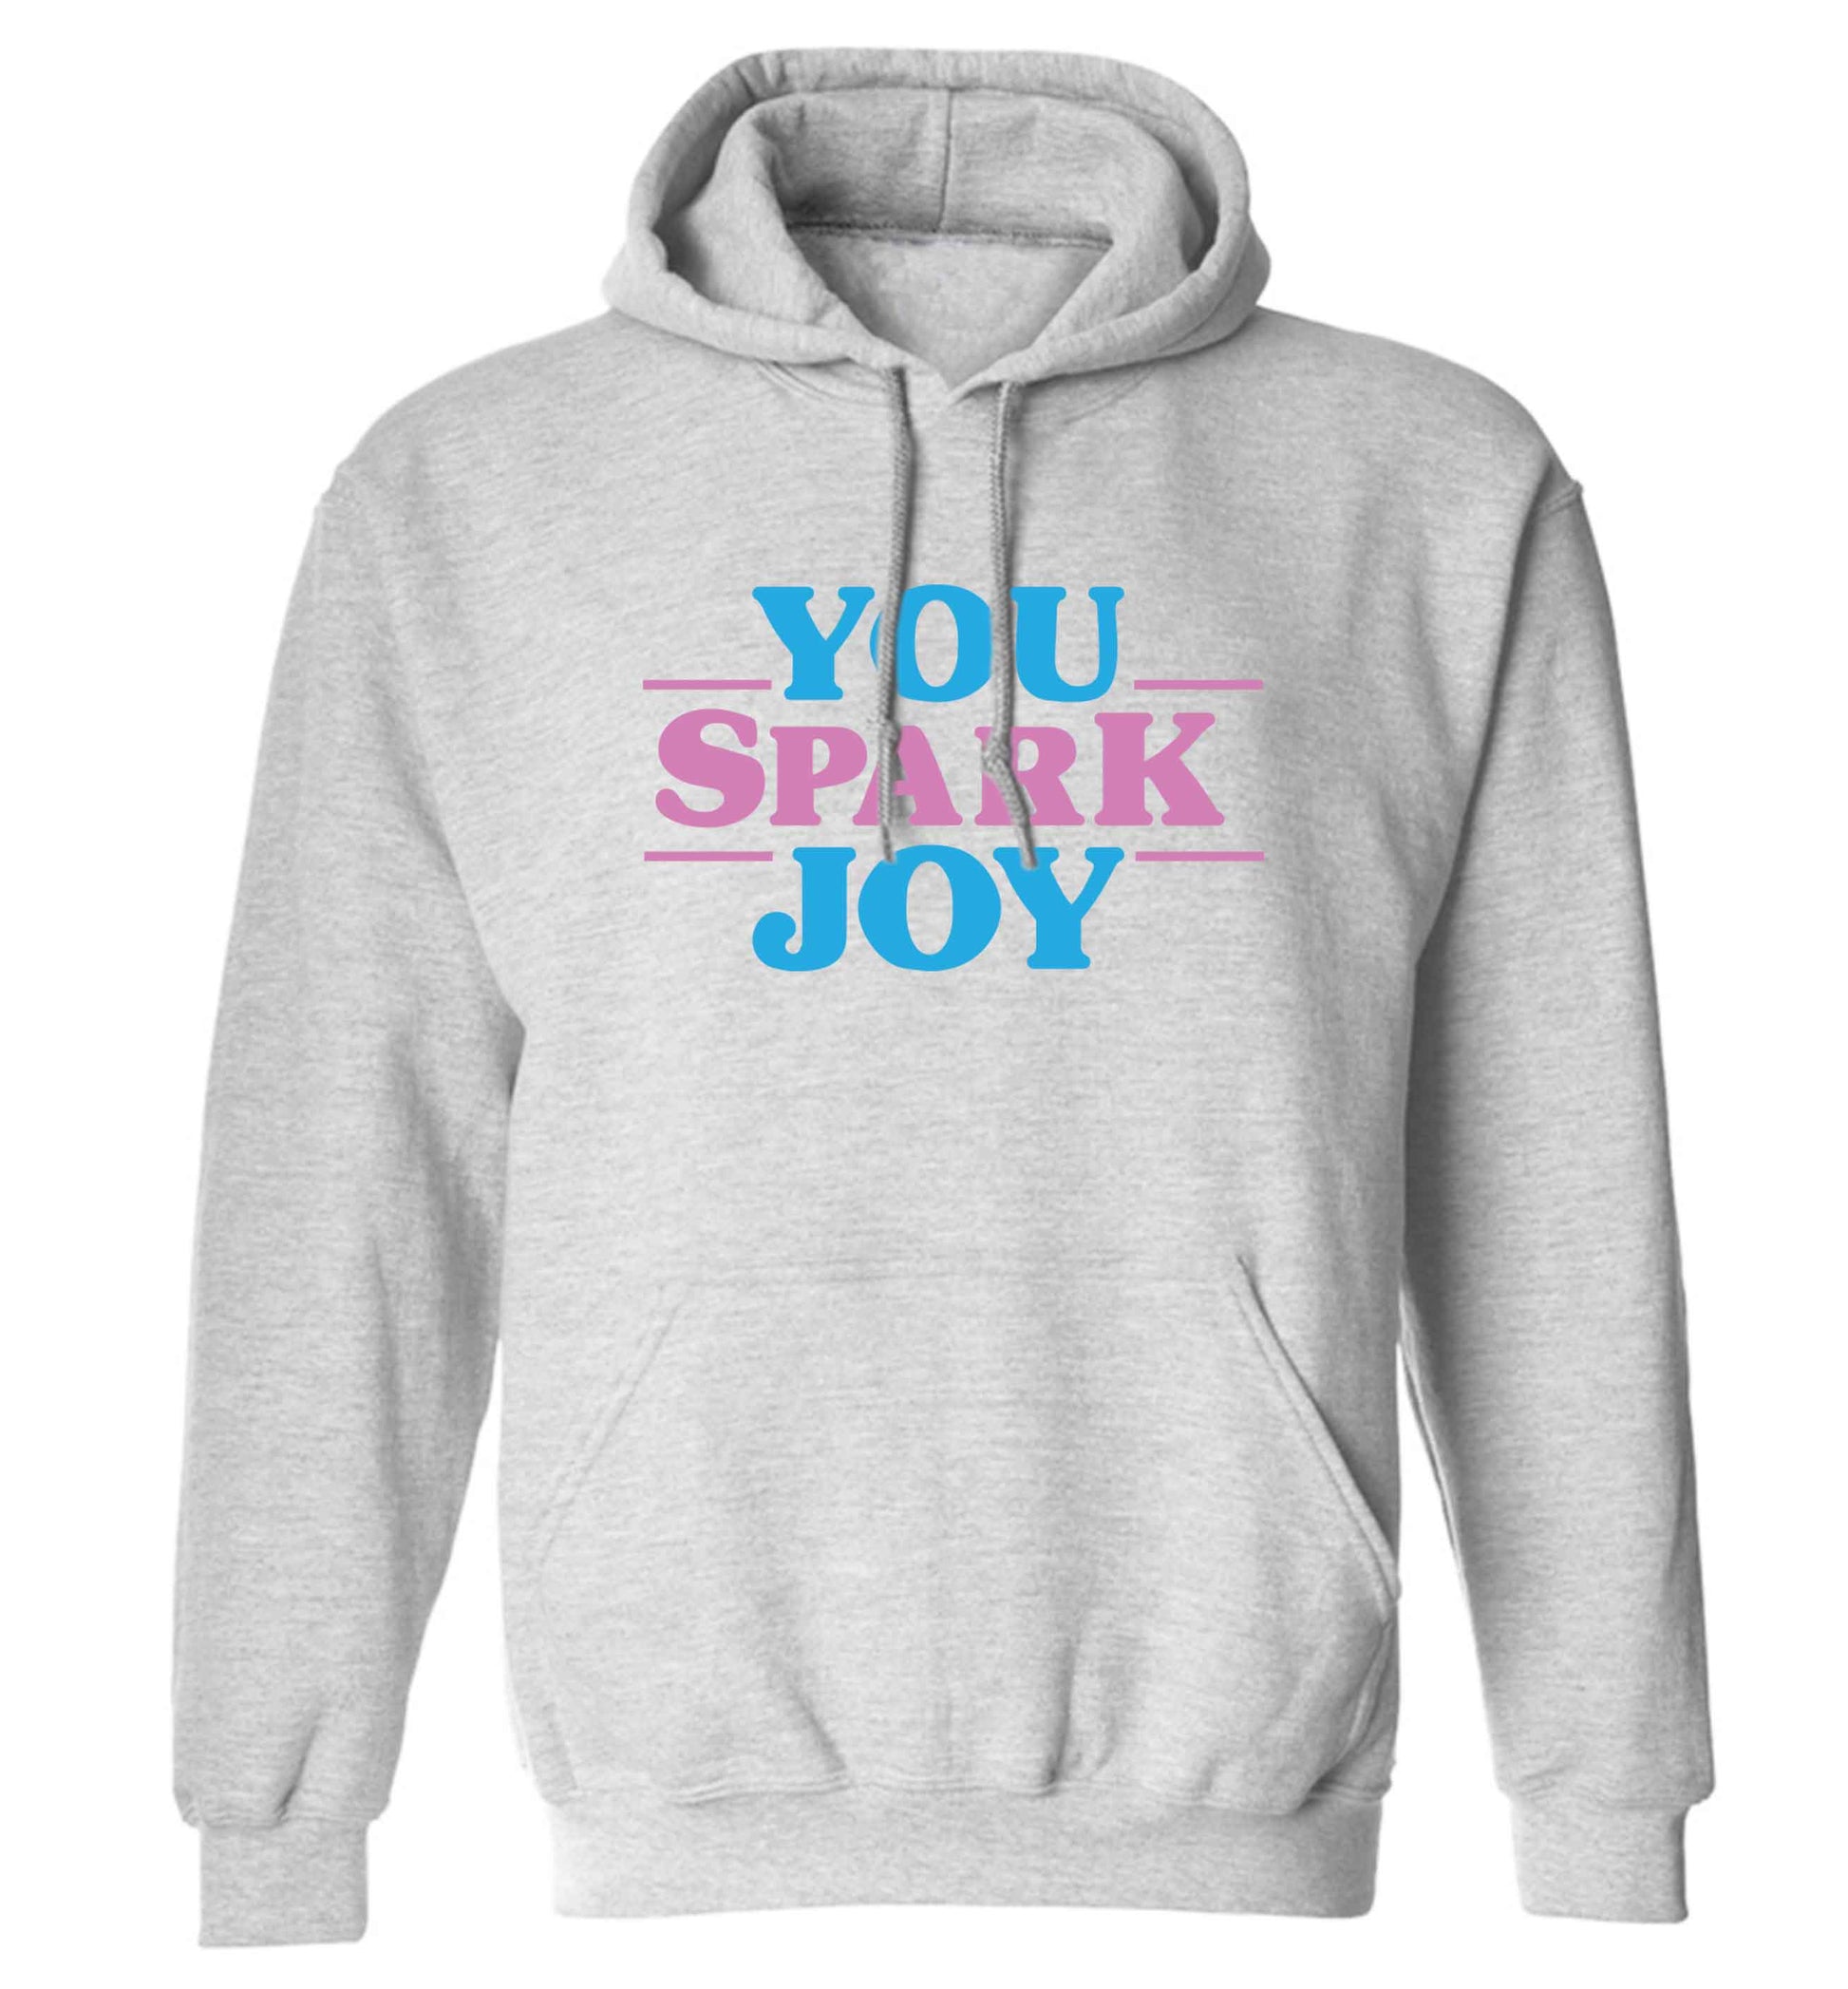 You spark joy adults unisex grey hoodie 2XL